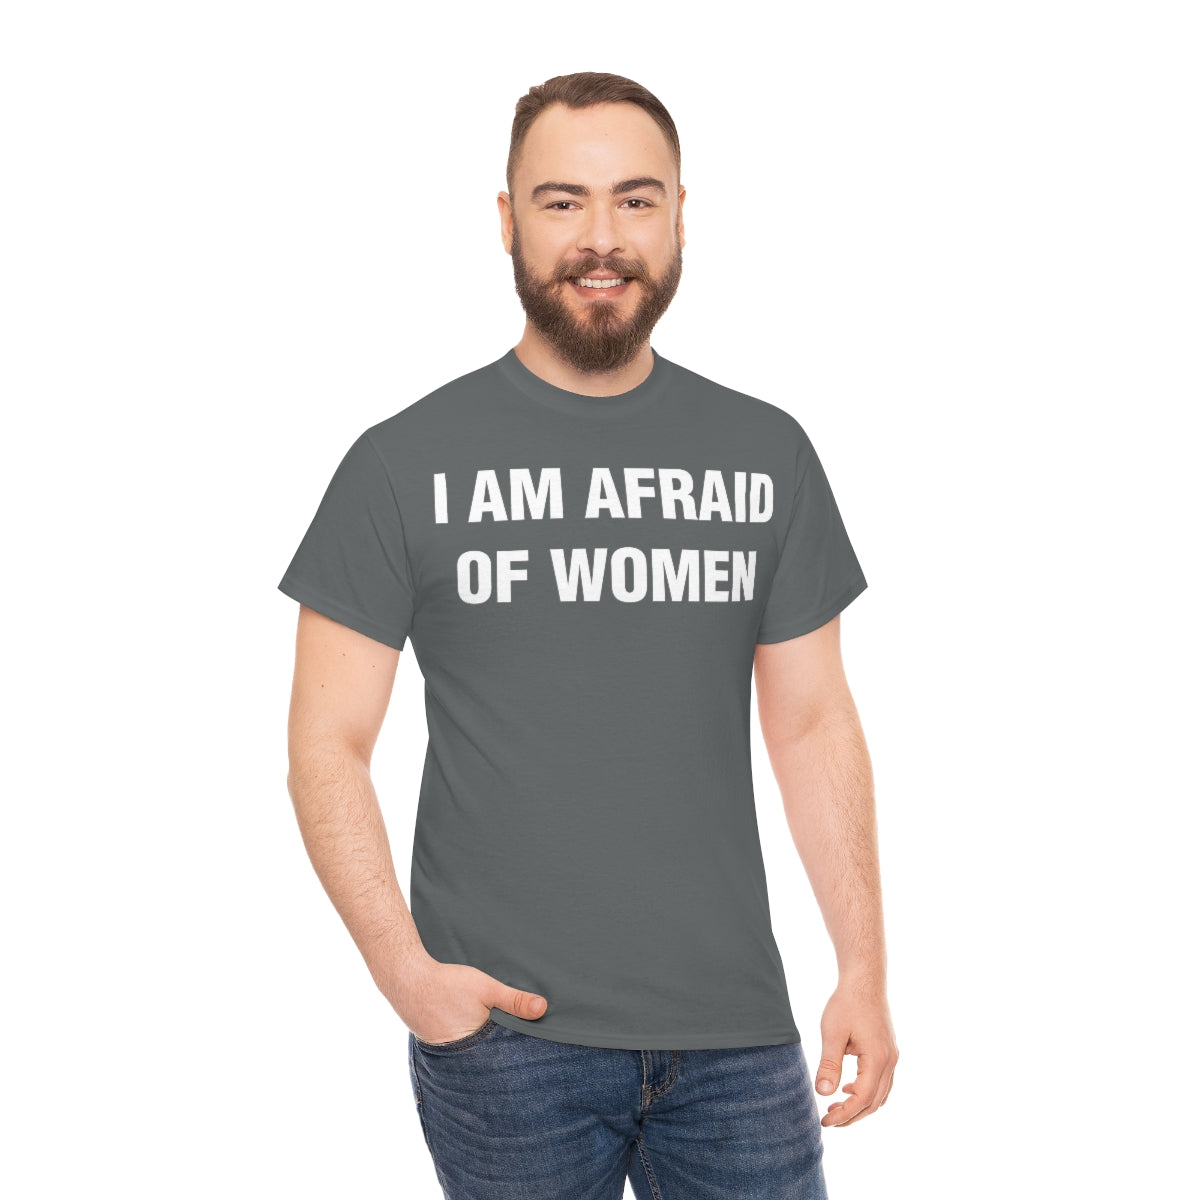 I AM AFRAID OF WOMEN TEE